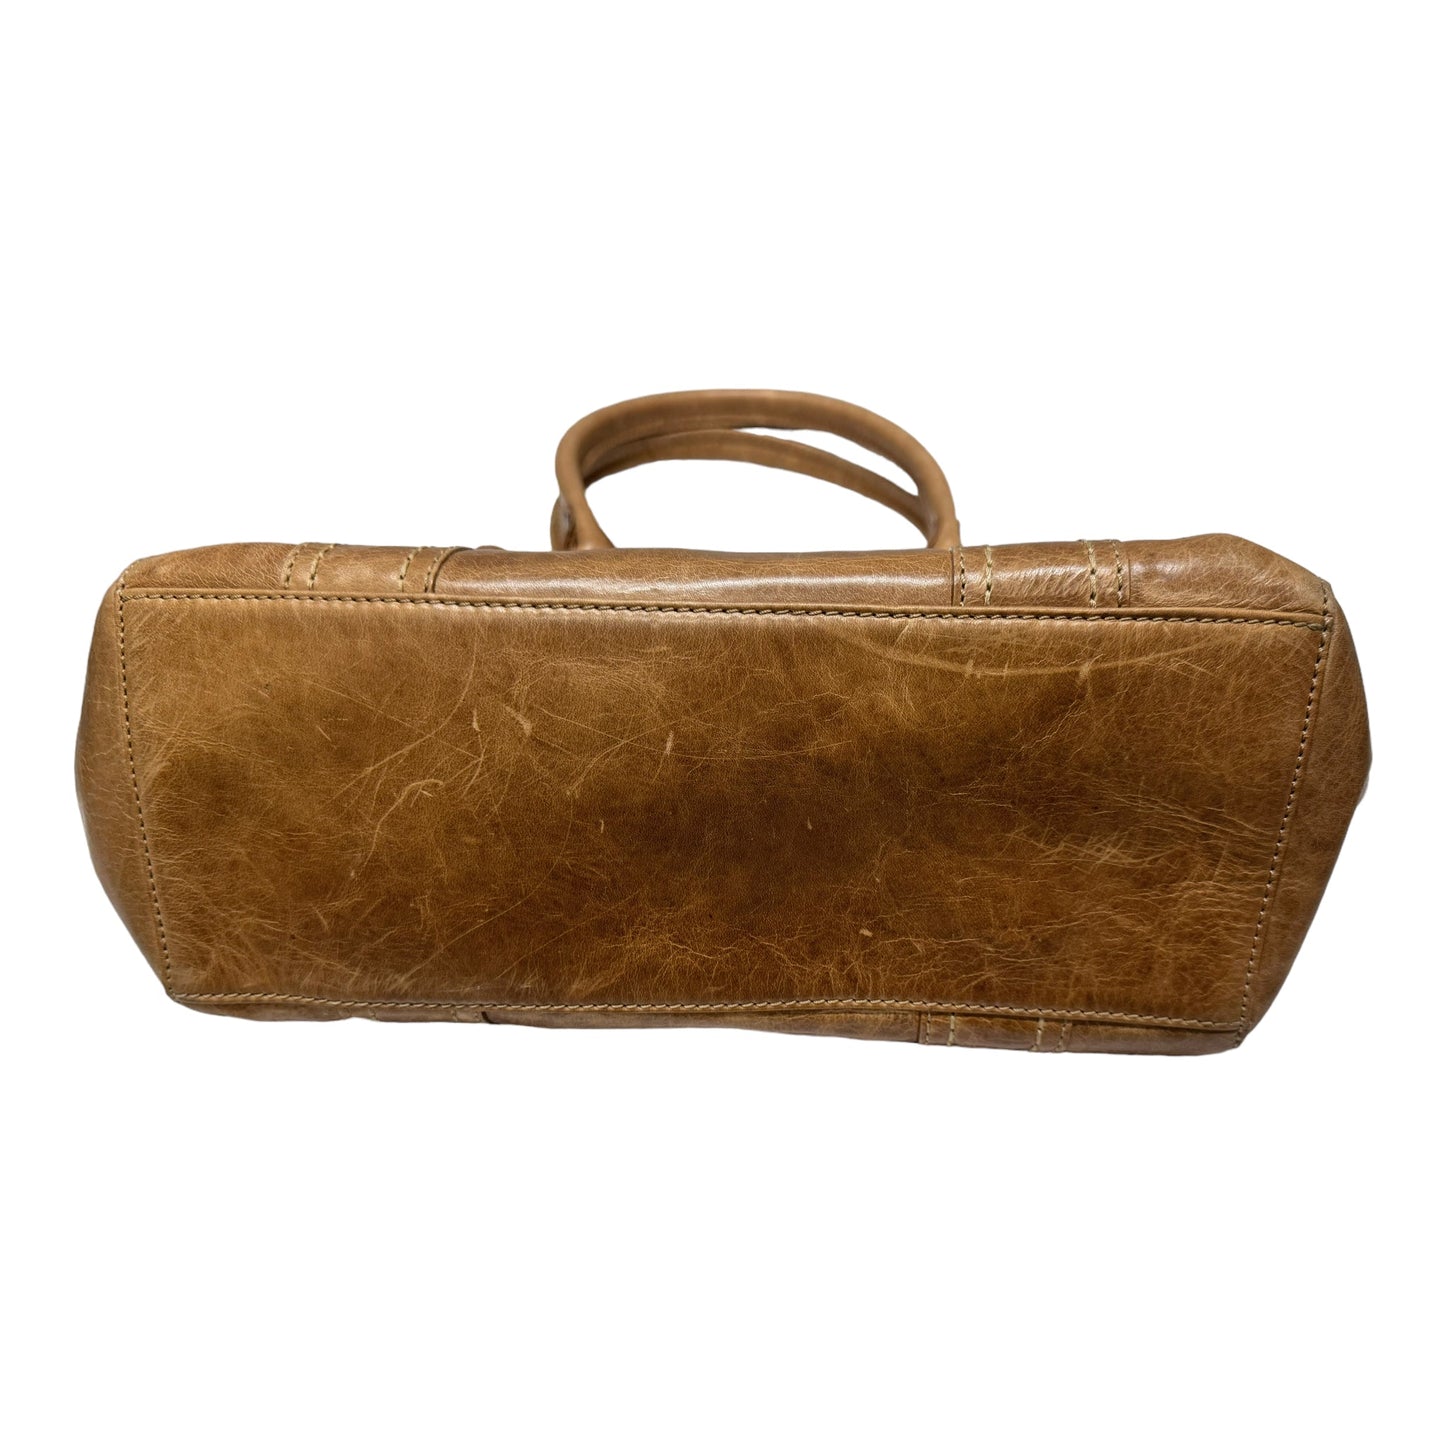 Handbag Designer By Frye  Size: Medium